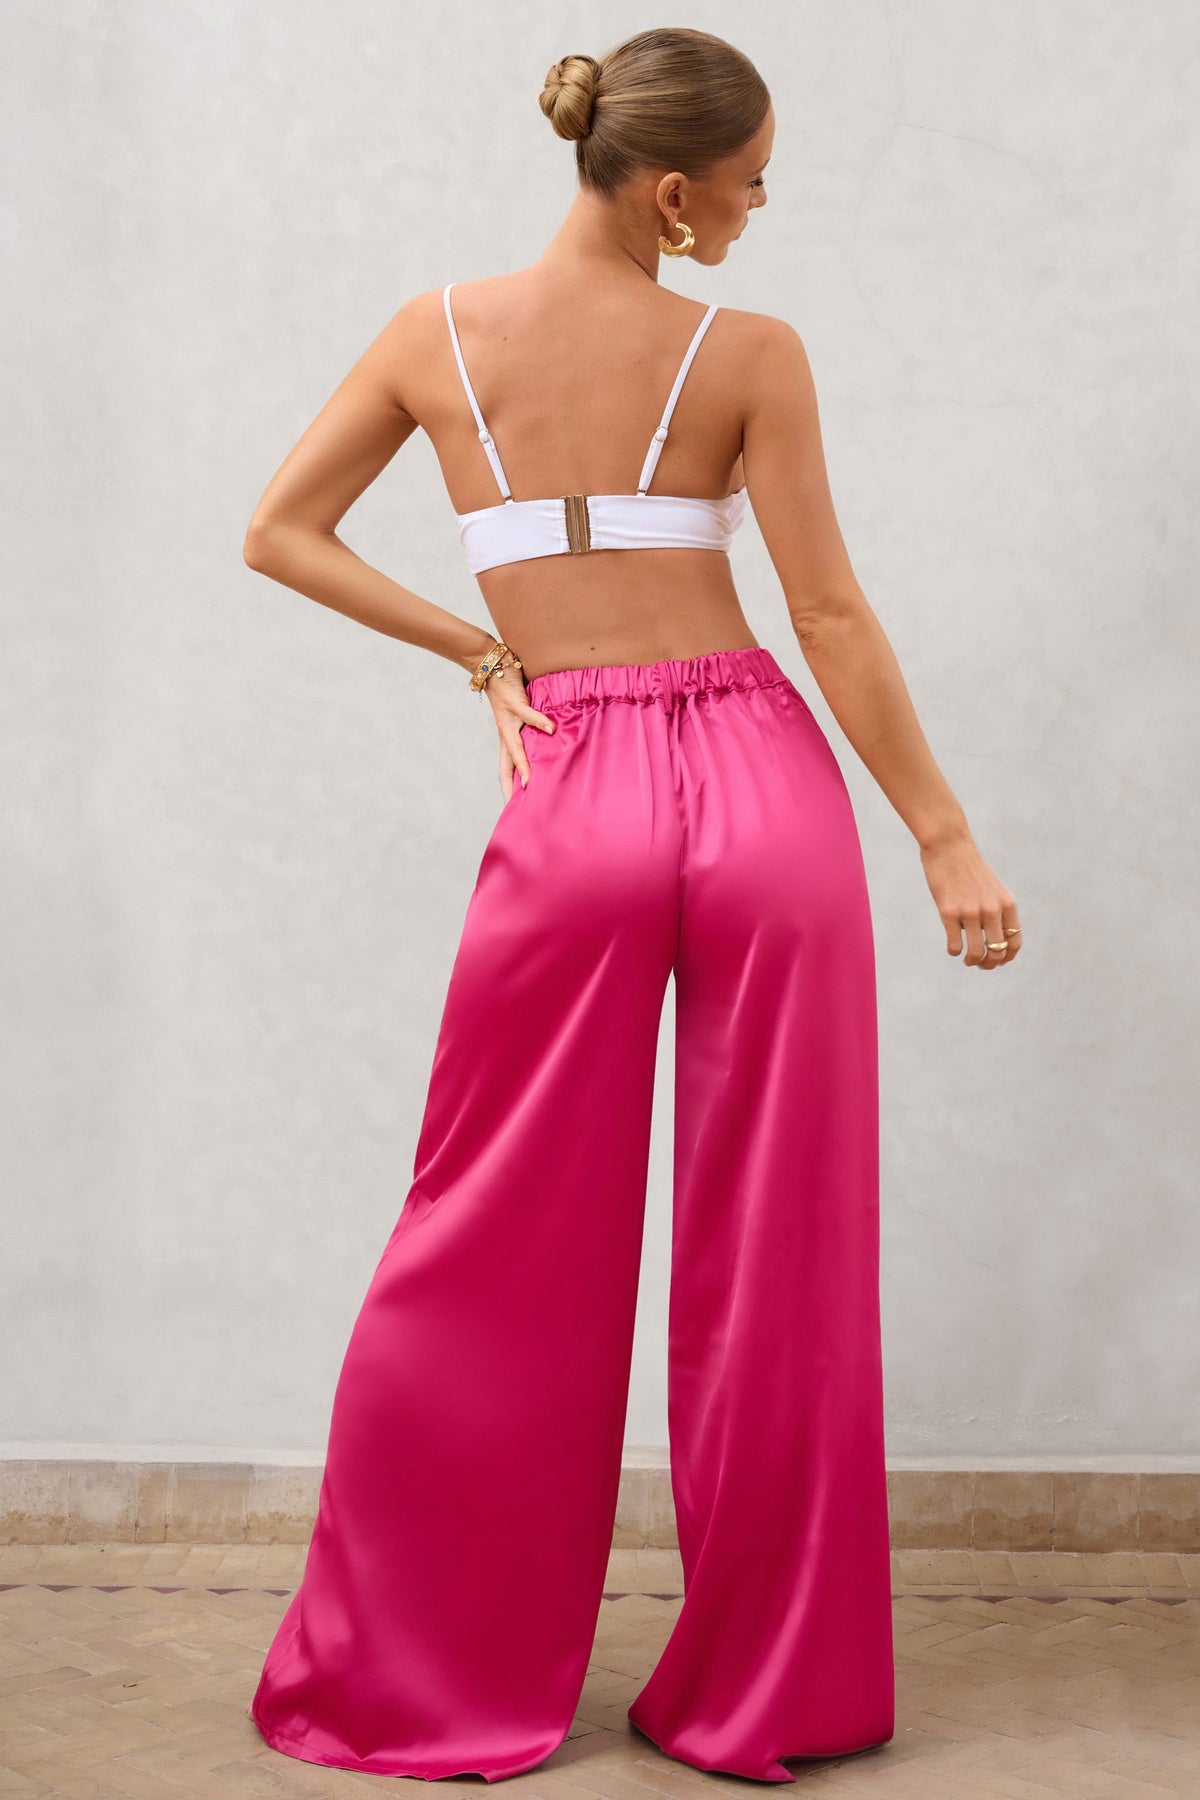 Ennyluap HOT Pink HIGH Waist Pants (10) at  Women's Clothing store